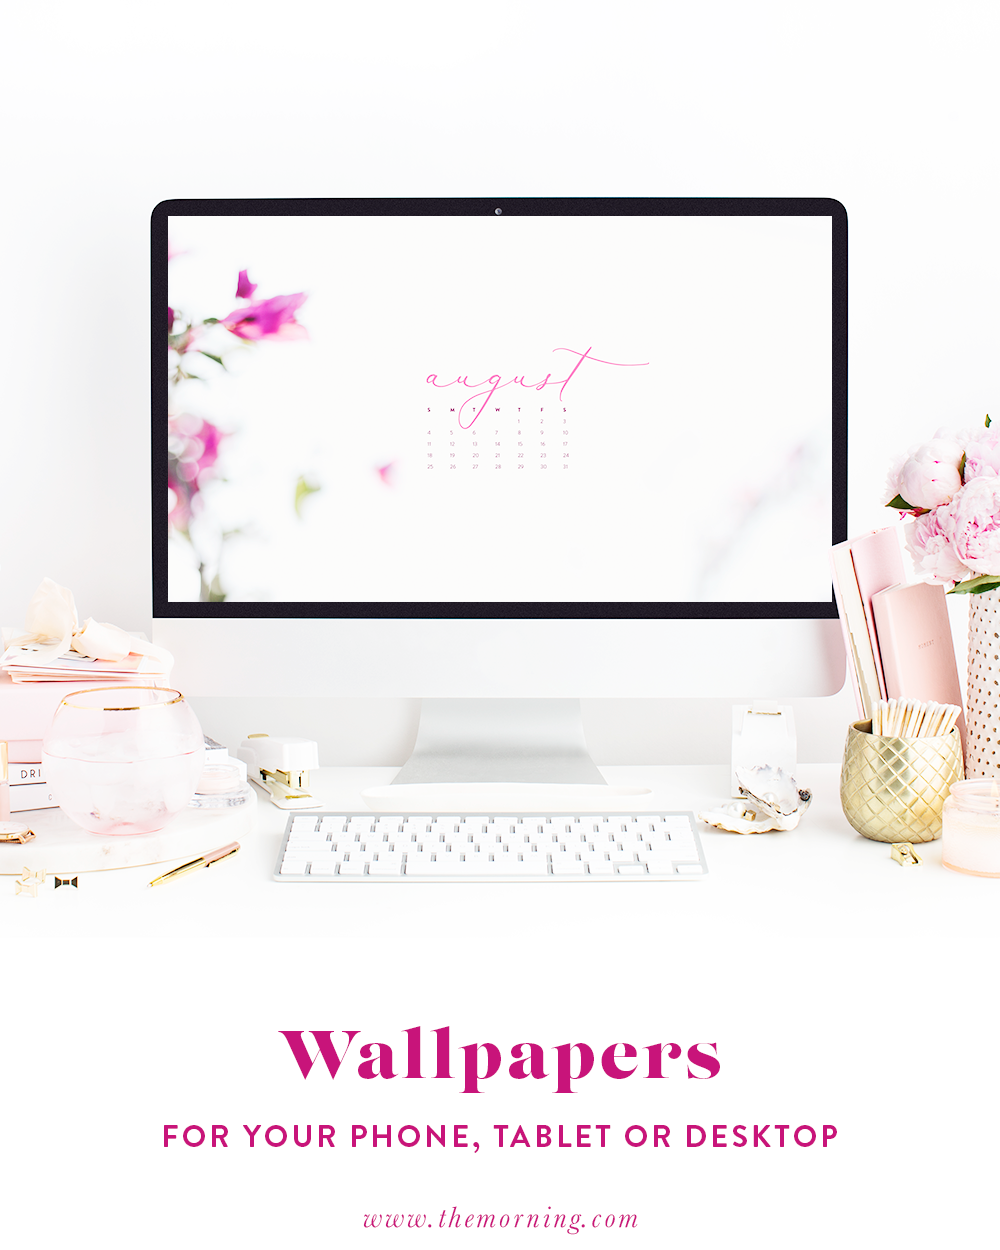 Free wallpaper downloads for phone, tablet and desktop